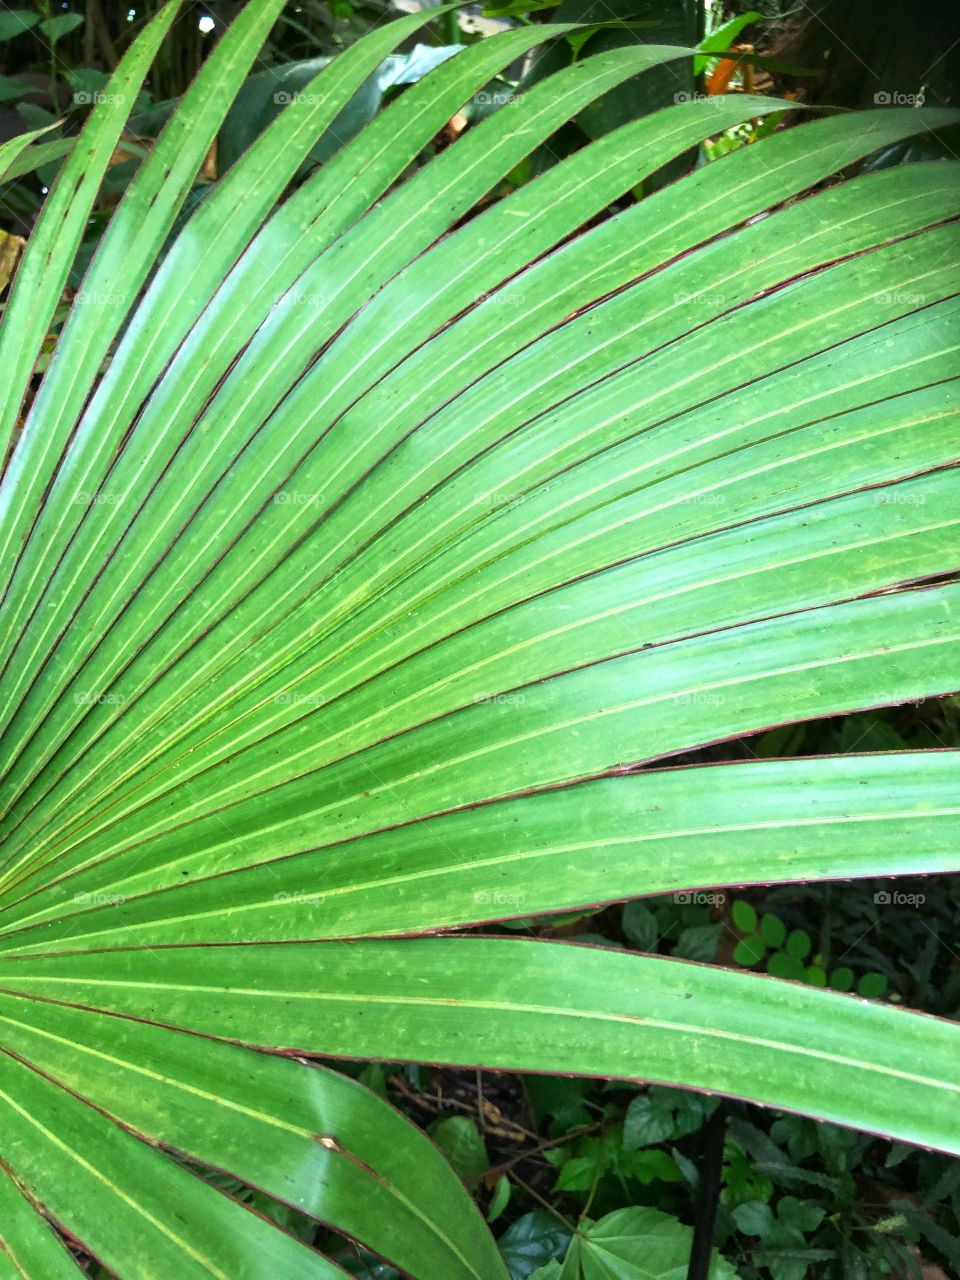 Palm leaf close up